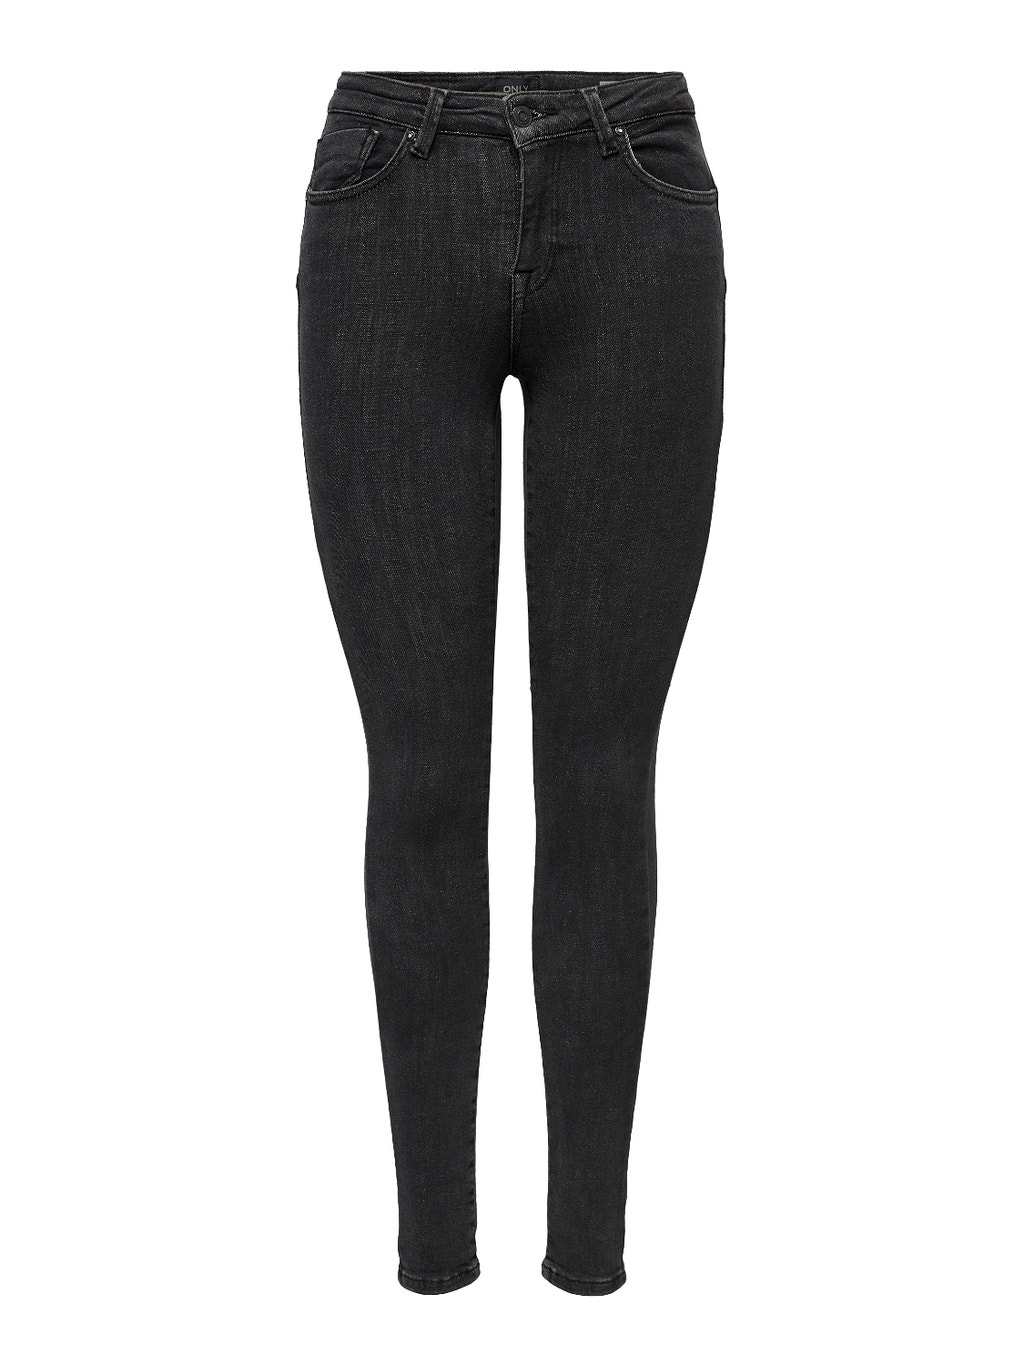 ONLPower mid push up Skinny fit jeans | Medium grå | ONLY®